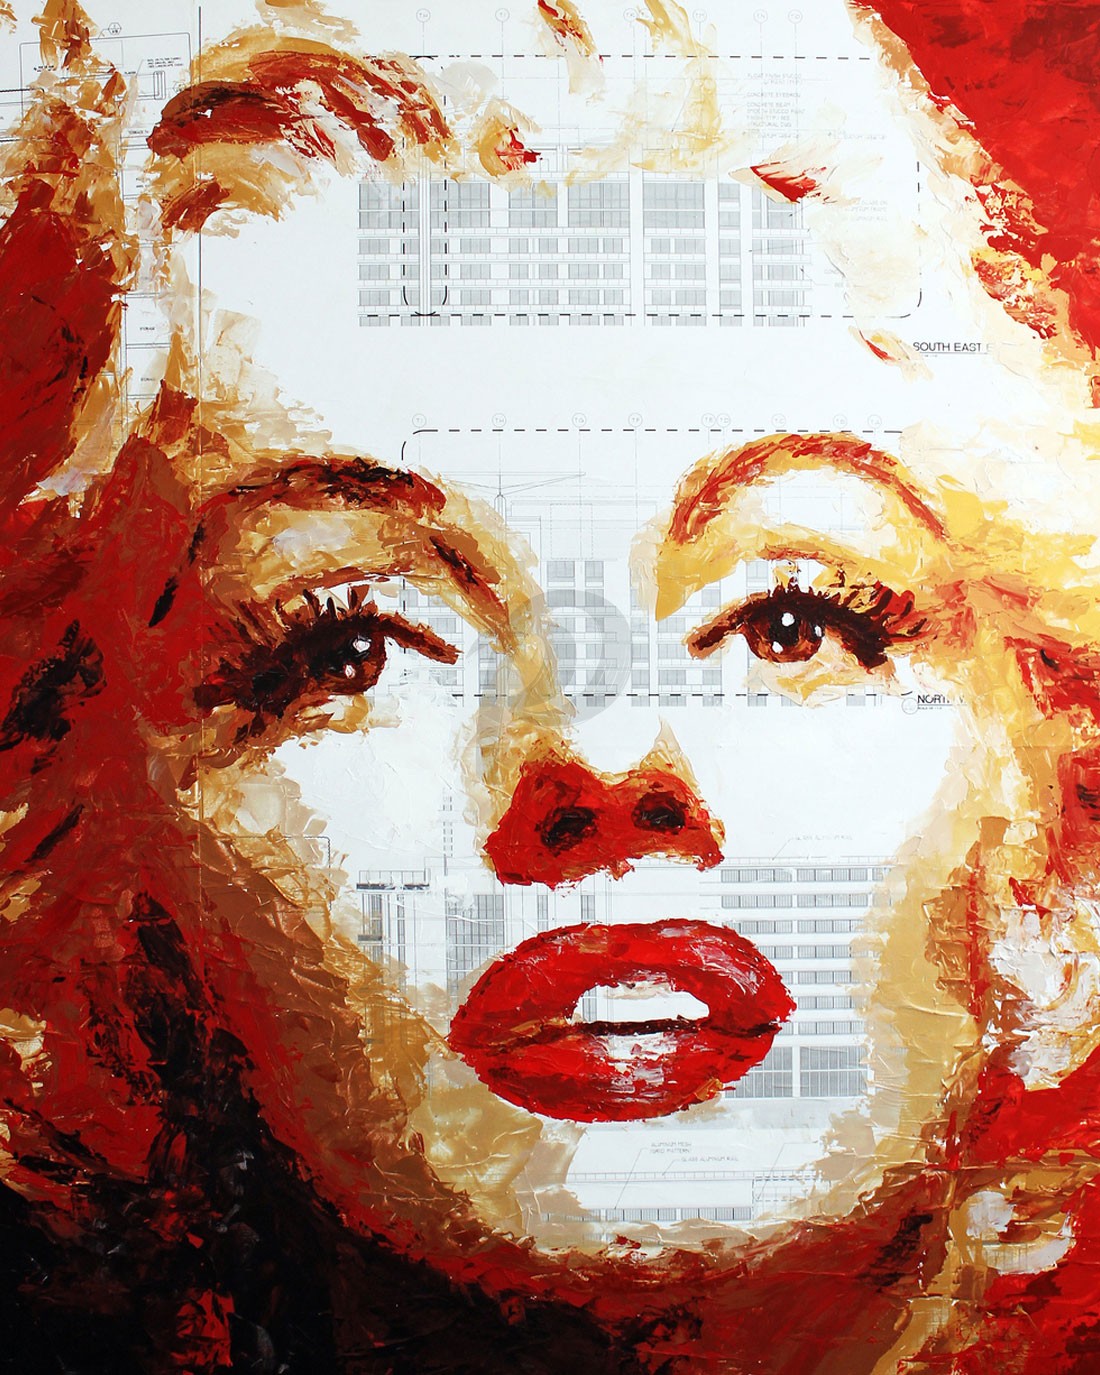 Havi Schanz - Marilyn on Blueprint (Hand-Painted Reproduction)